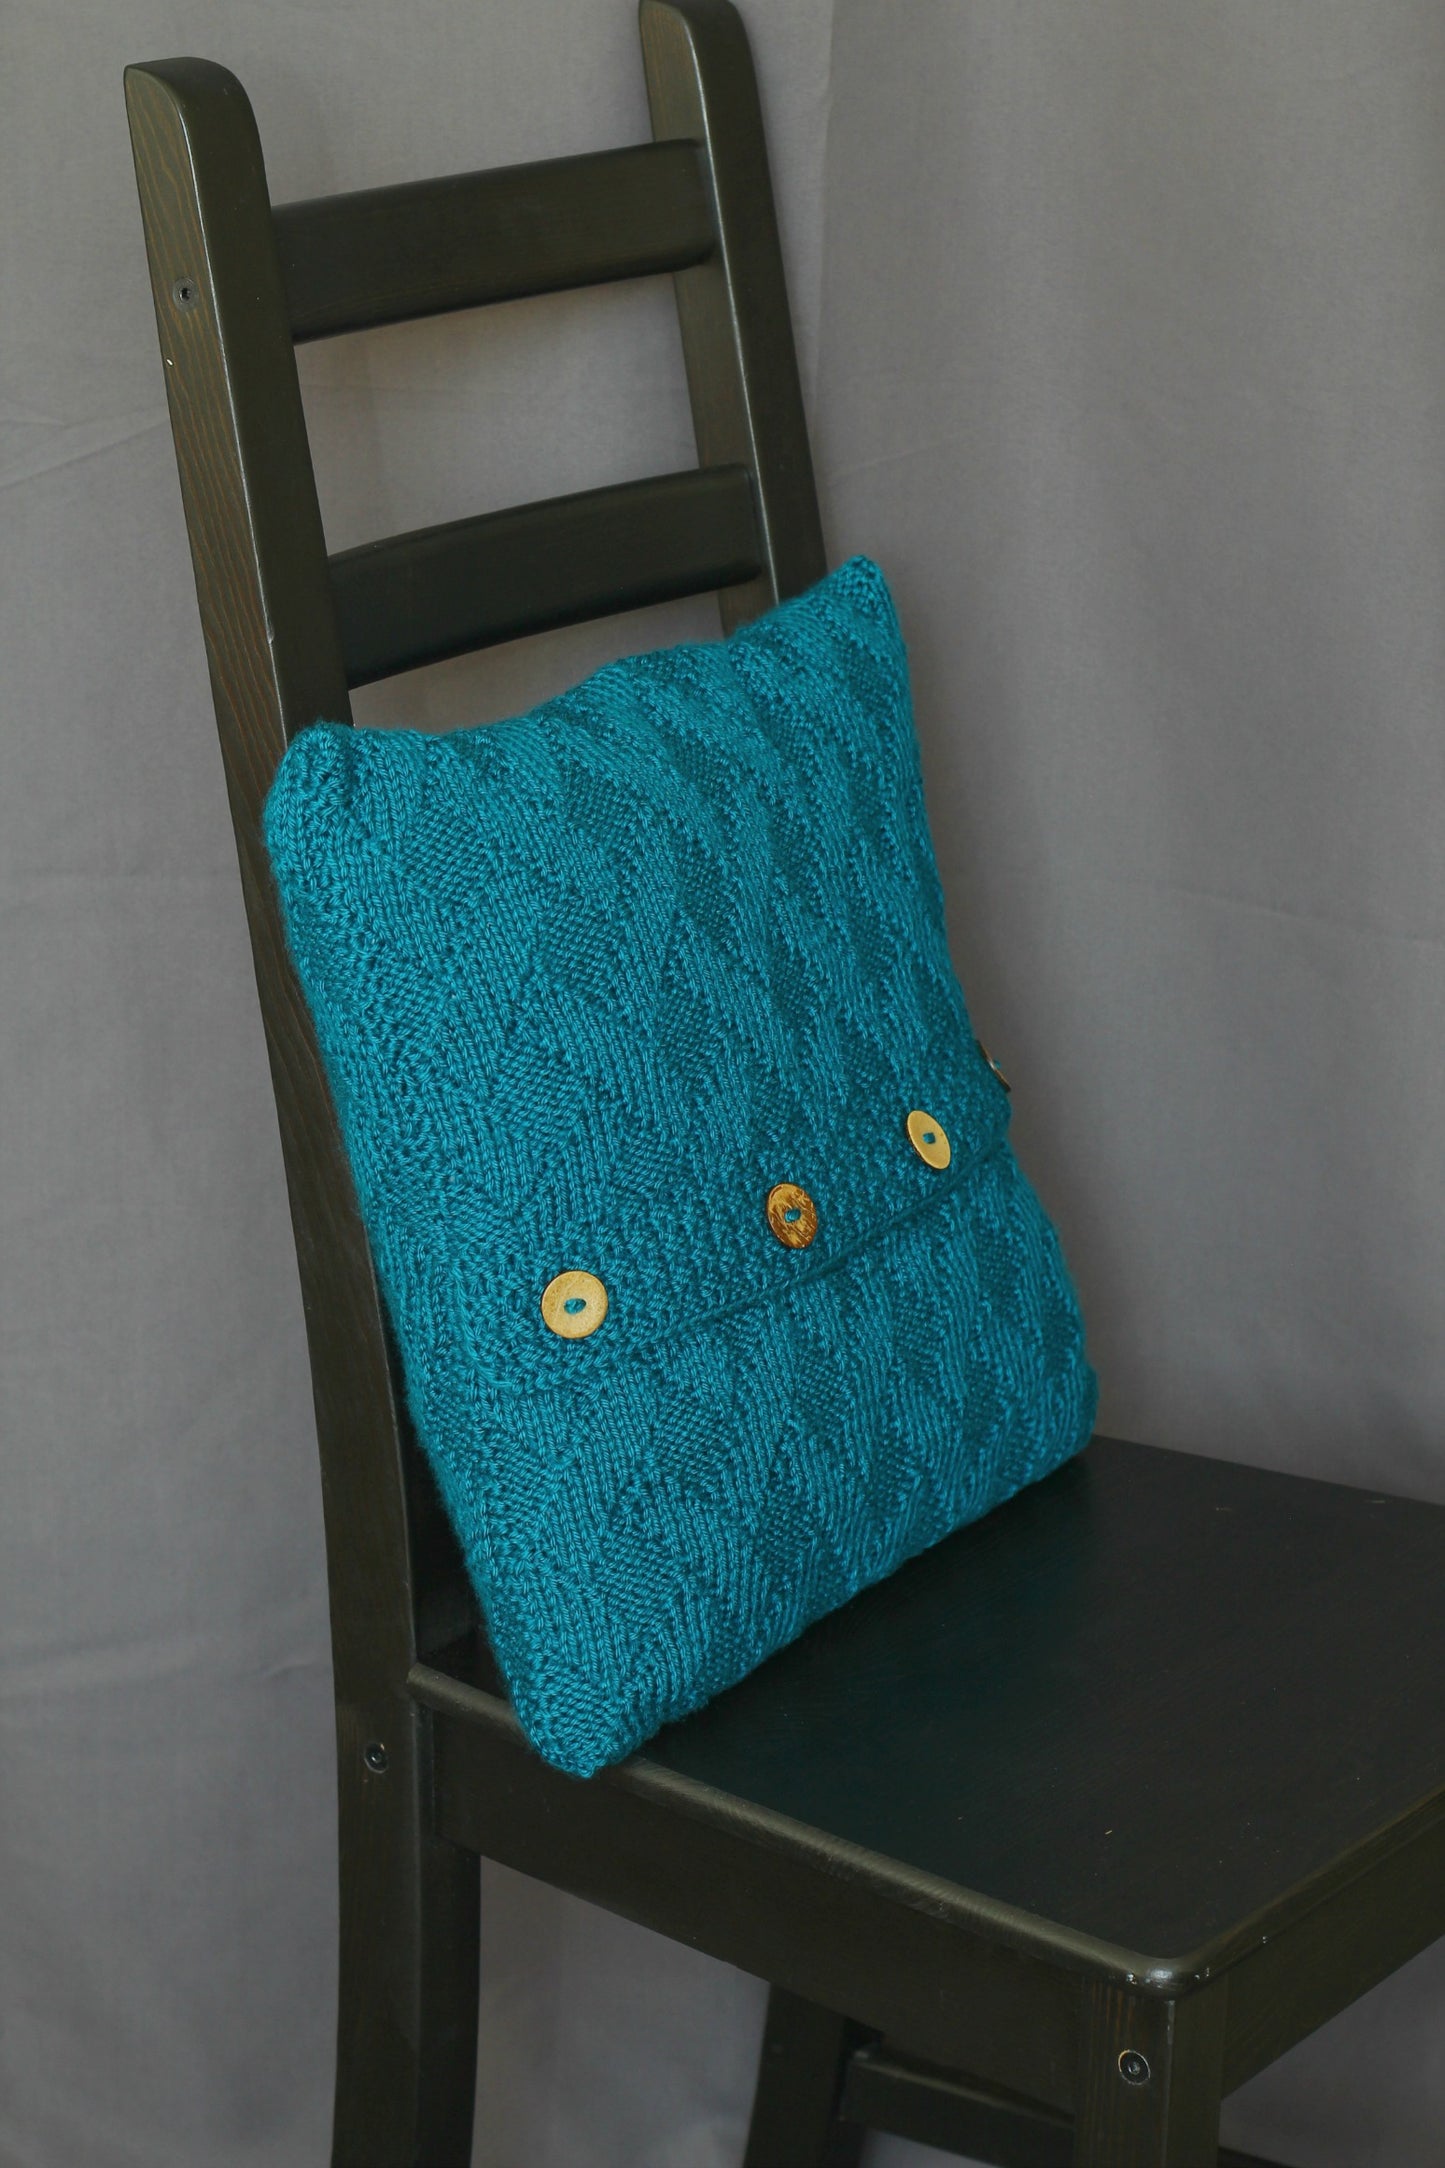 Knit pillow case, knitting pattern - Morrow pillow